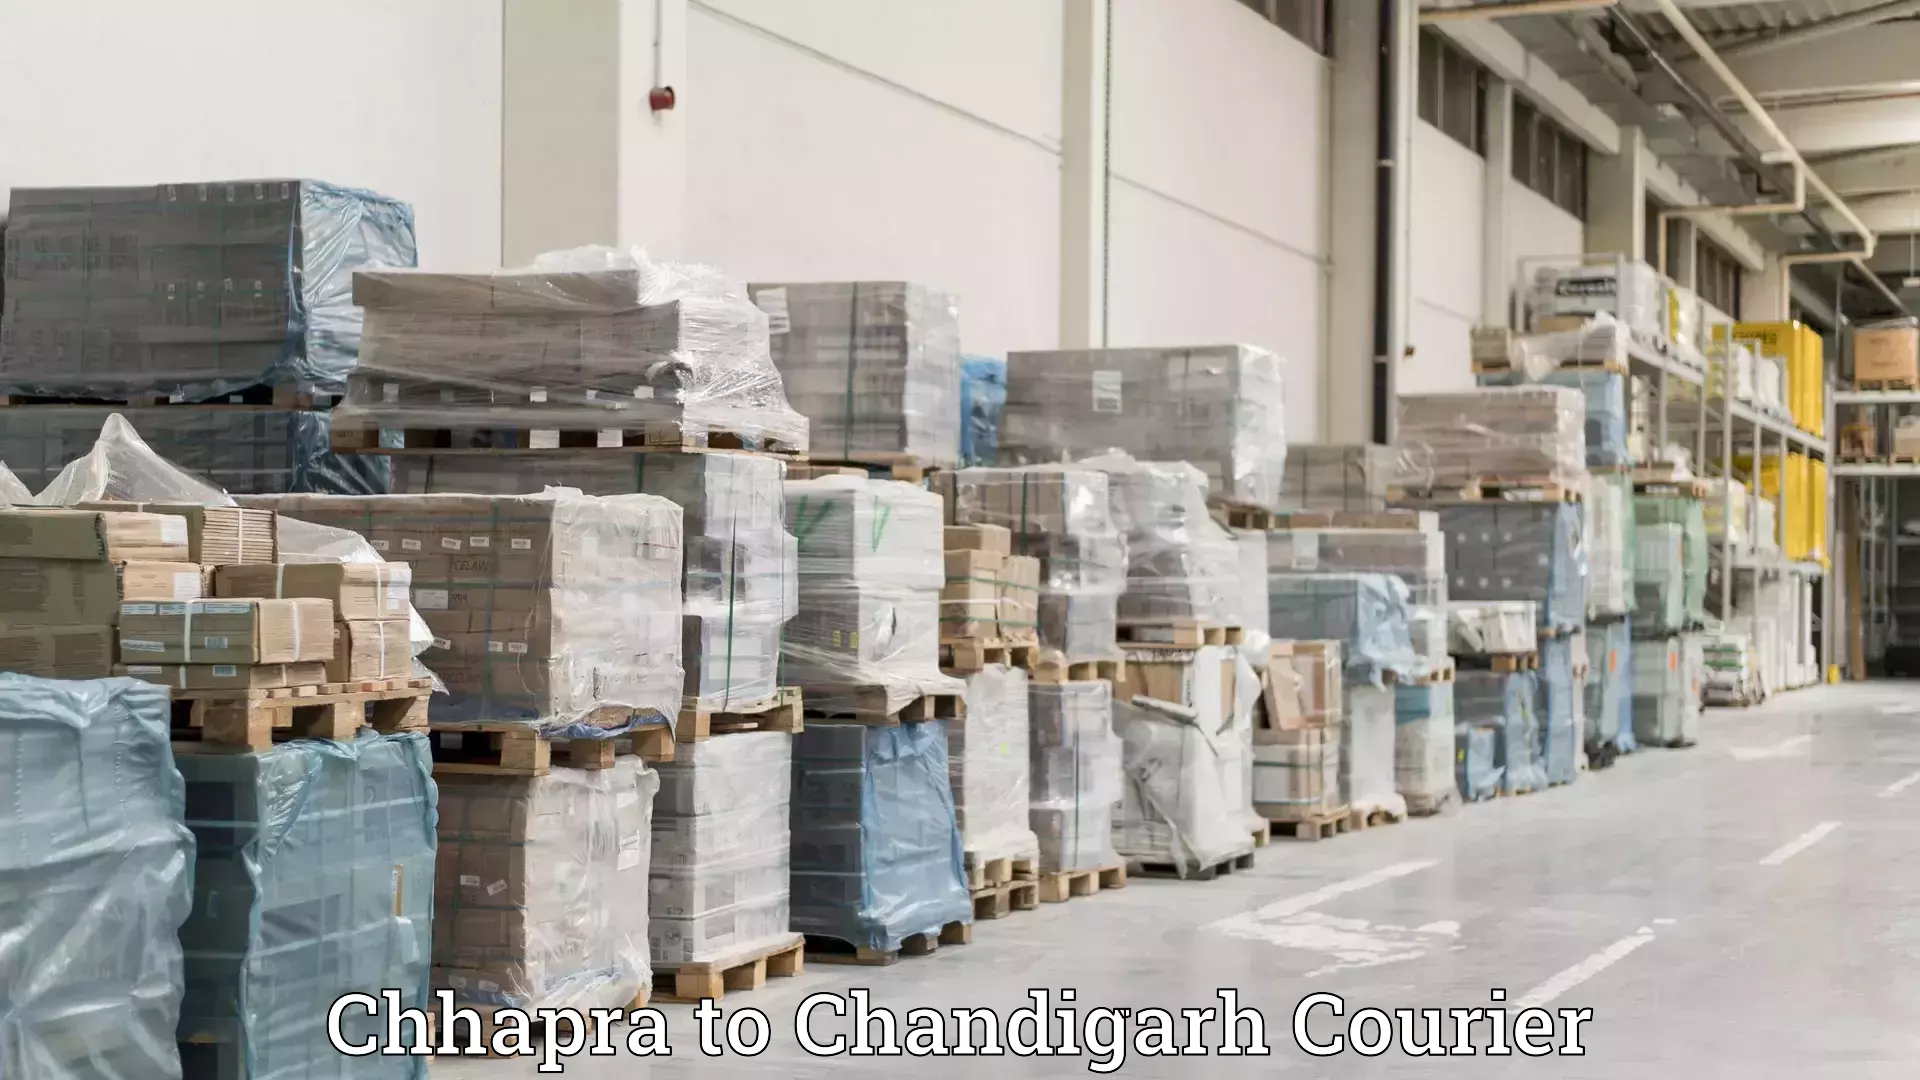 Professional moving company Chhapra to Chandigarh